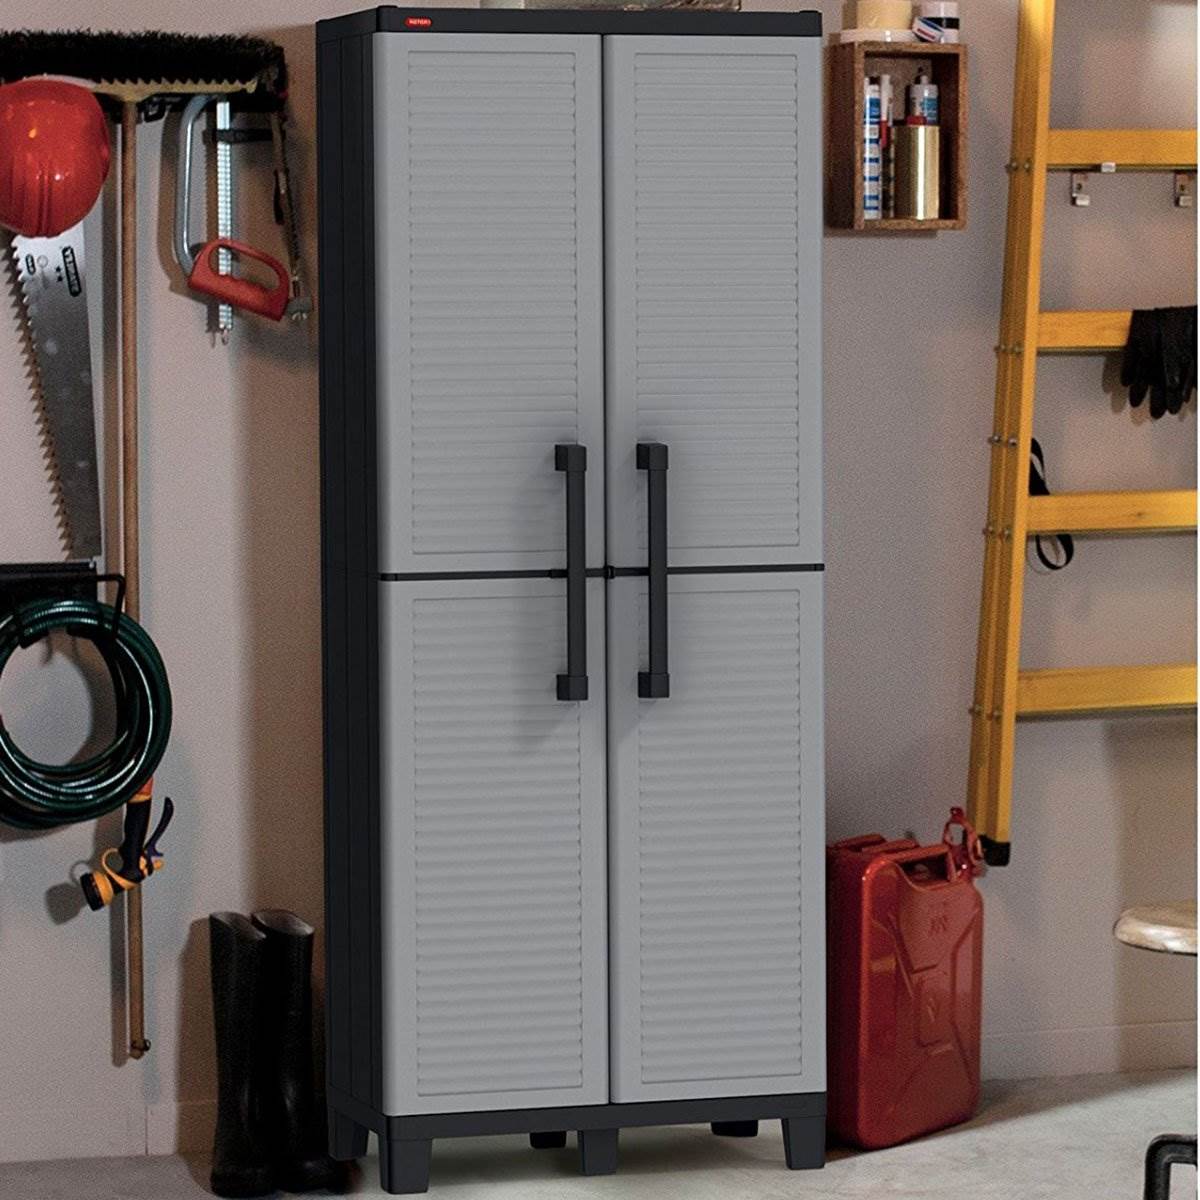 Keter Space Winner Adjustable Garage Storage Gray Resin Utility Cabinet | 227138 - image 3 of 6